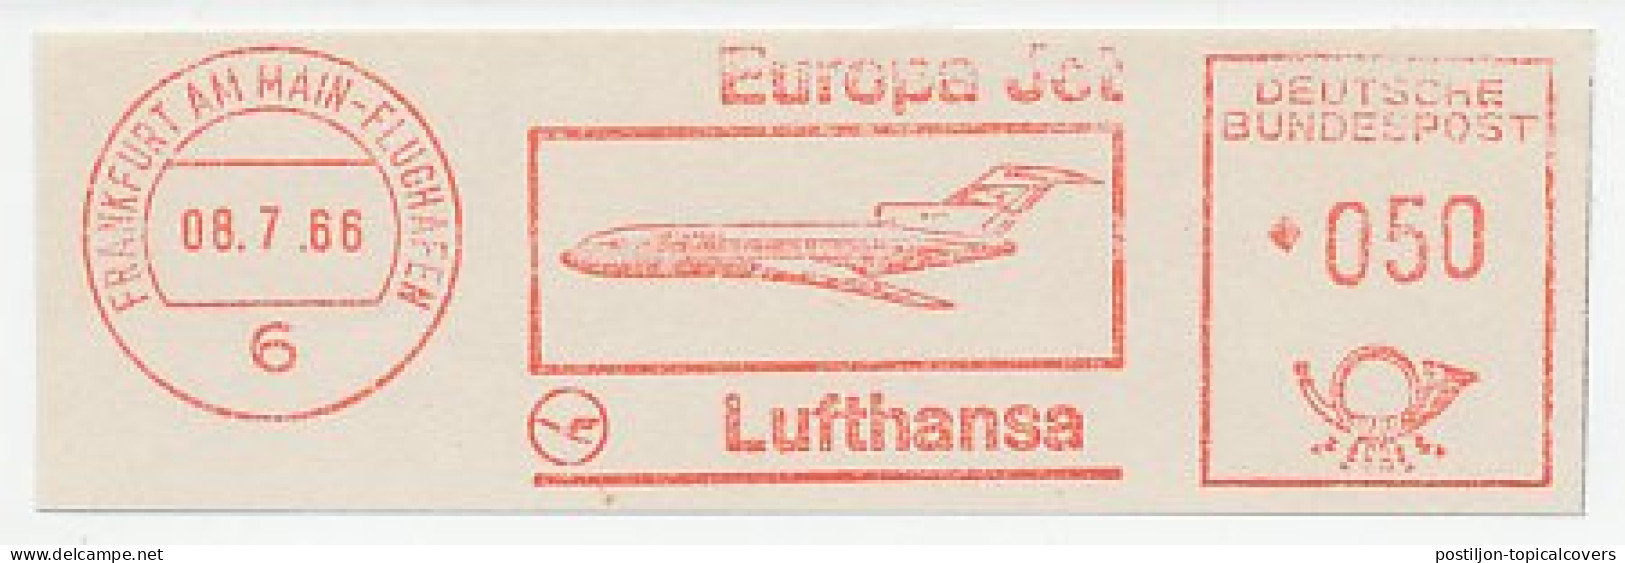 Meter Cut Germany 1966 Airline - Lufthansa - Europa Jet - Avions